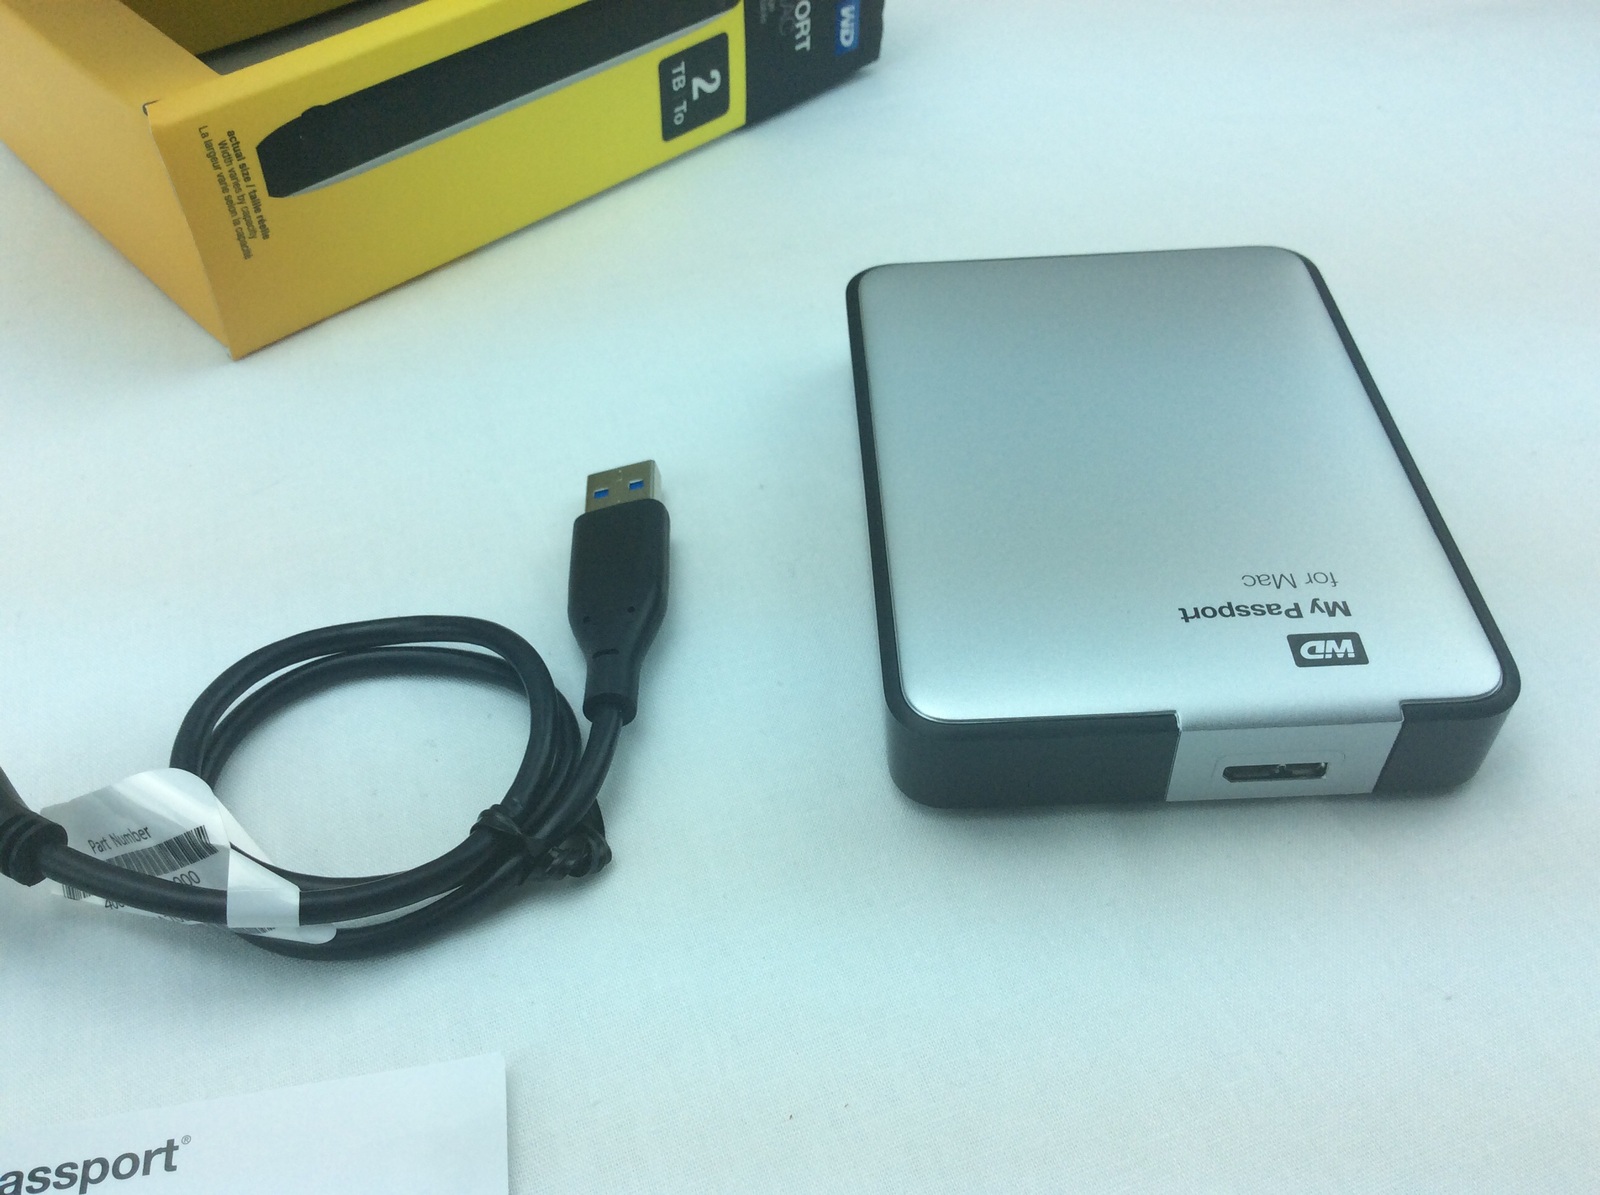 western digital external hard drive for macbook air